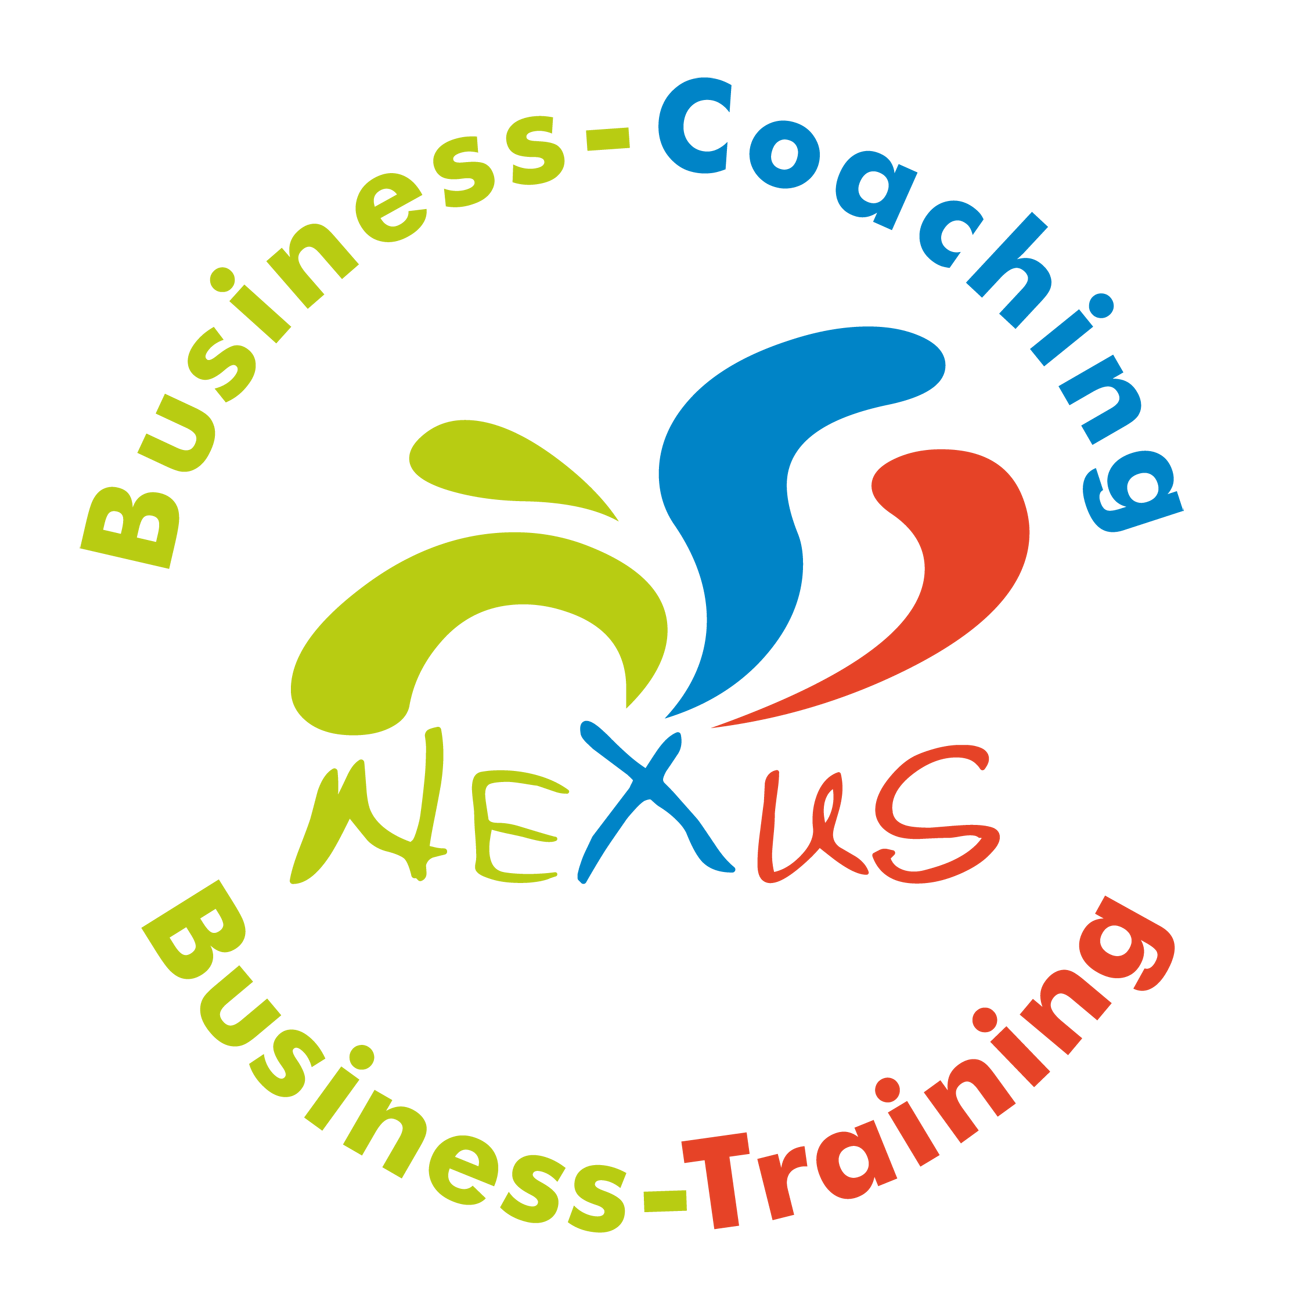 Business-Coaching Bad Vilbel, Business-Einzelcoaching, Business-Training, Führungskräfte-Coaching Bad Vilbel, Führungskräfte-Training, Kommunikationstraining, Persönlichkeitstraining